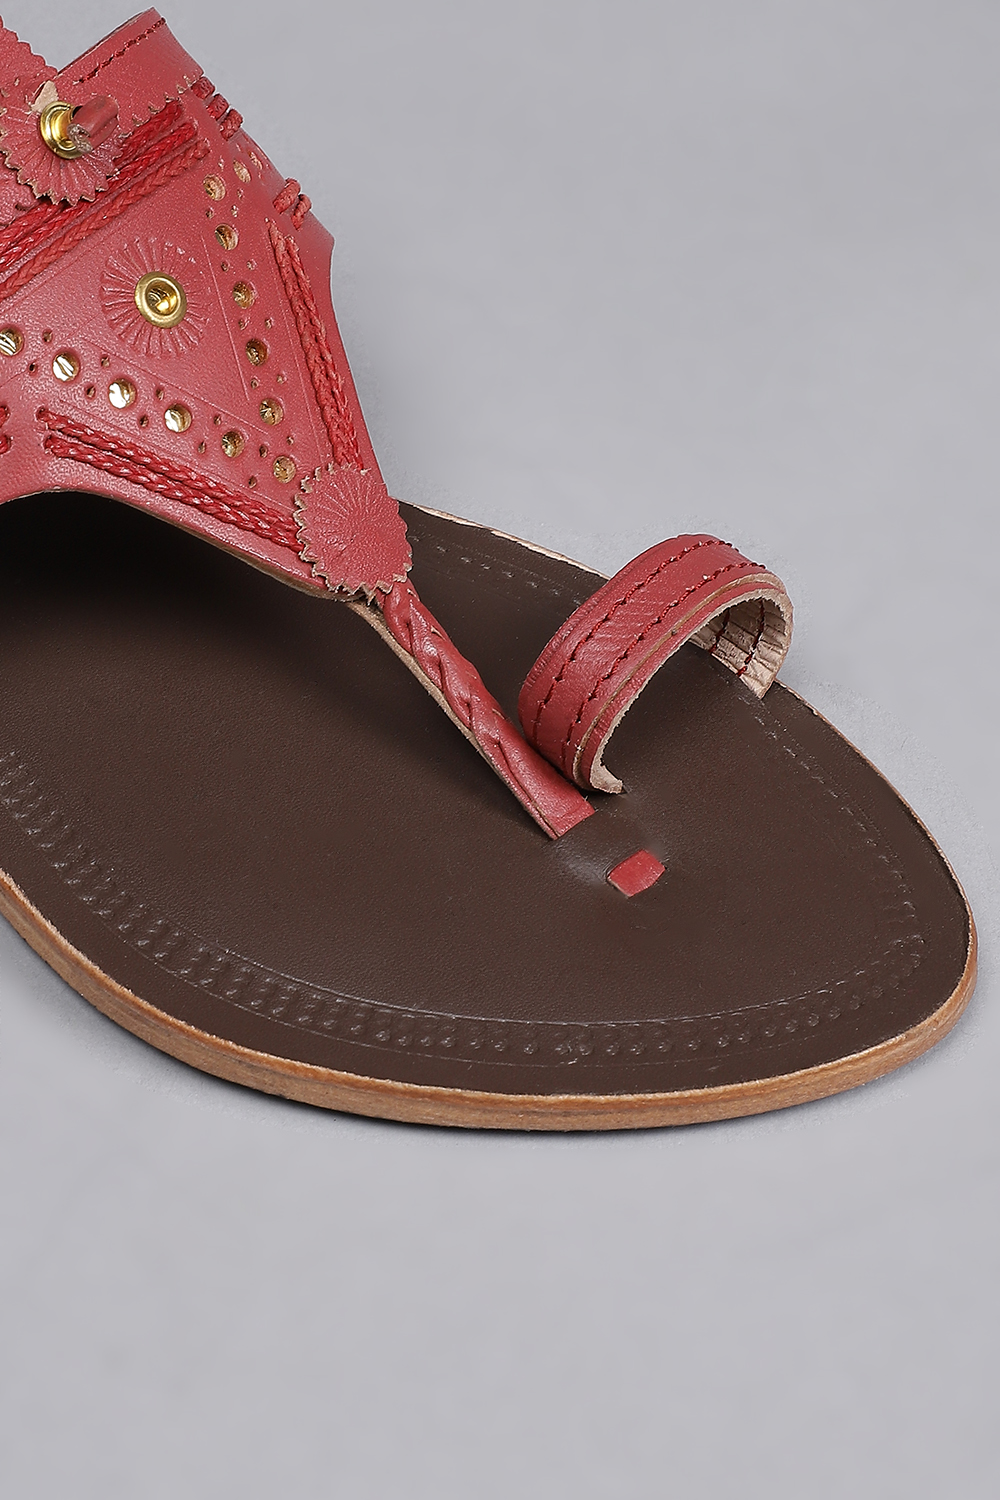 Cherry Red & Dark Brown Leather Kolhapuri Sandals image number 1